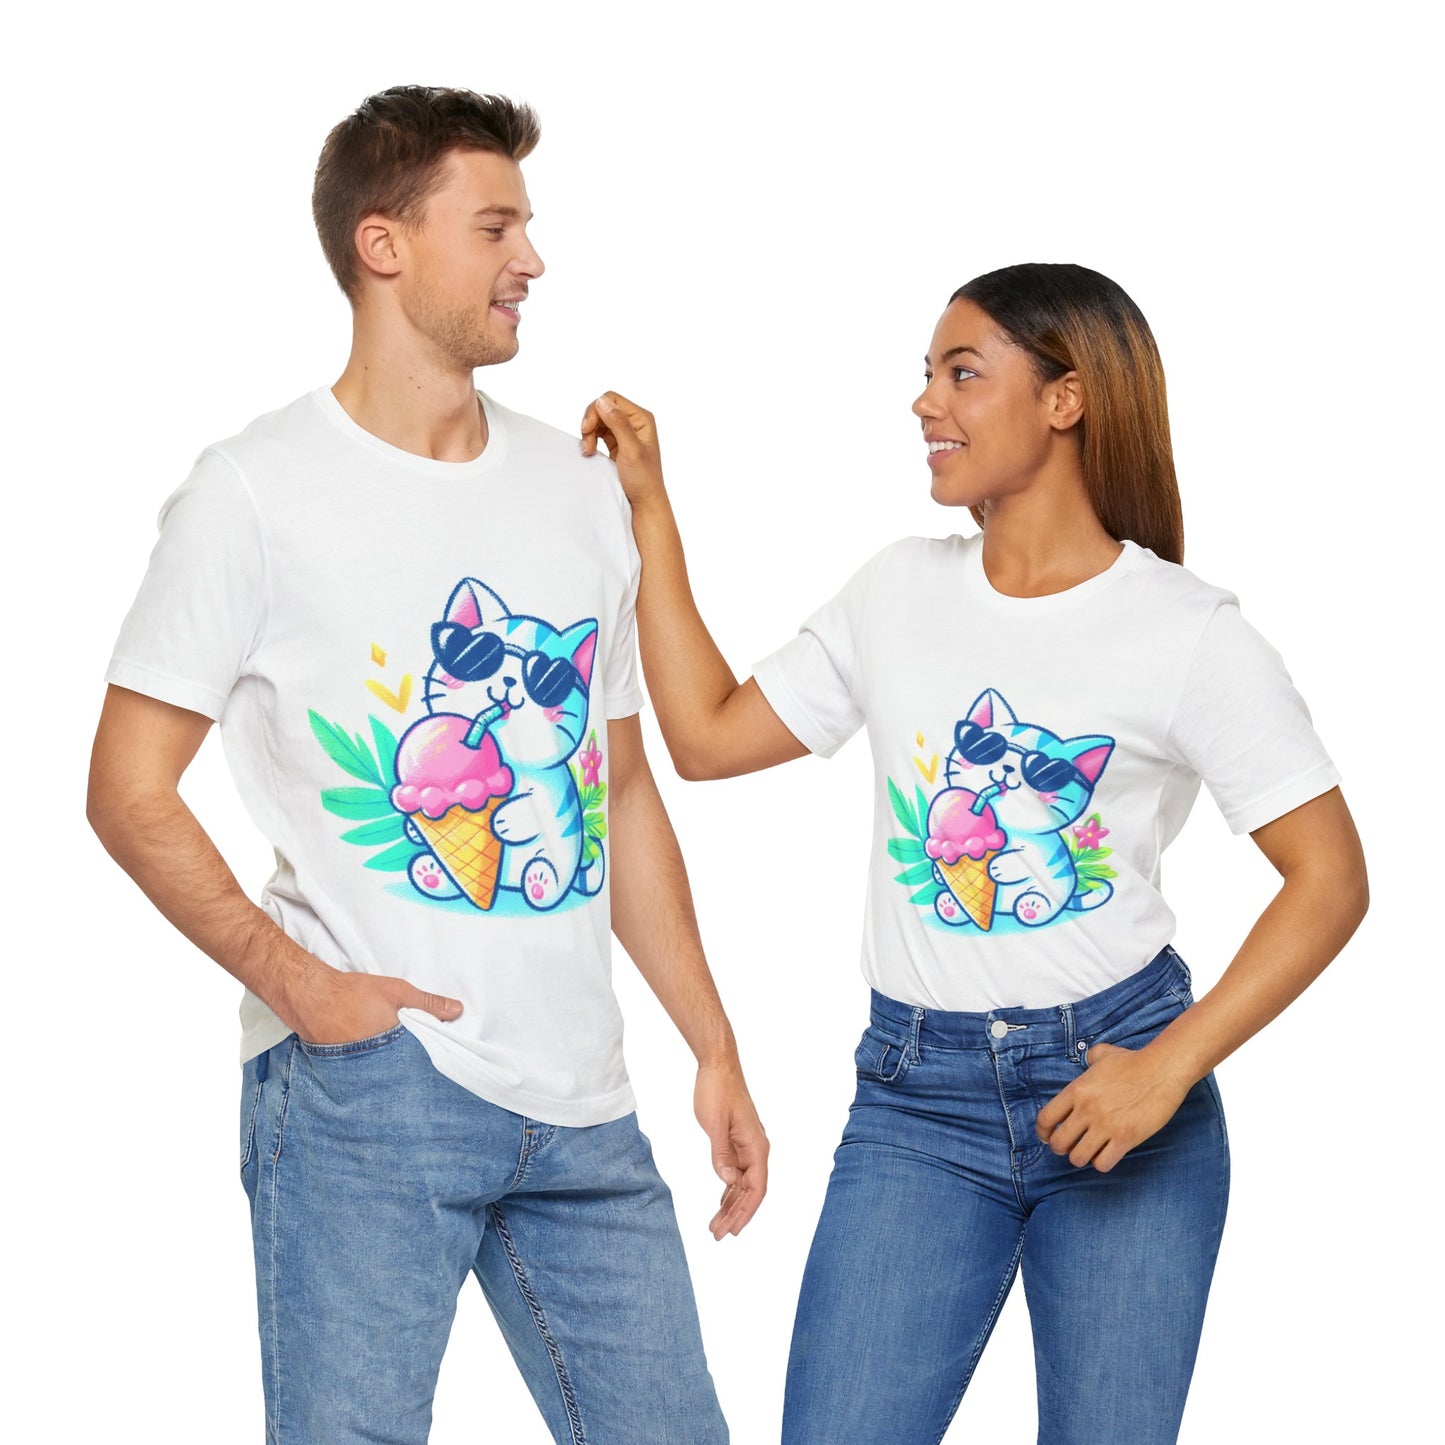 Pastel Tropical Kitty Ice Cream T-Shirt: Unique Hand-Drawn Design